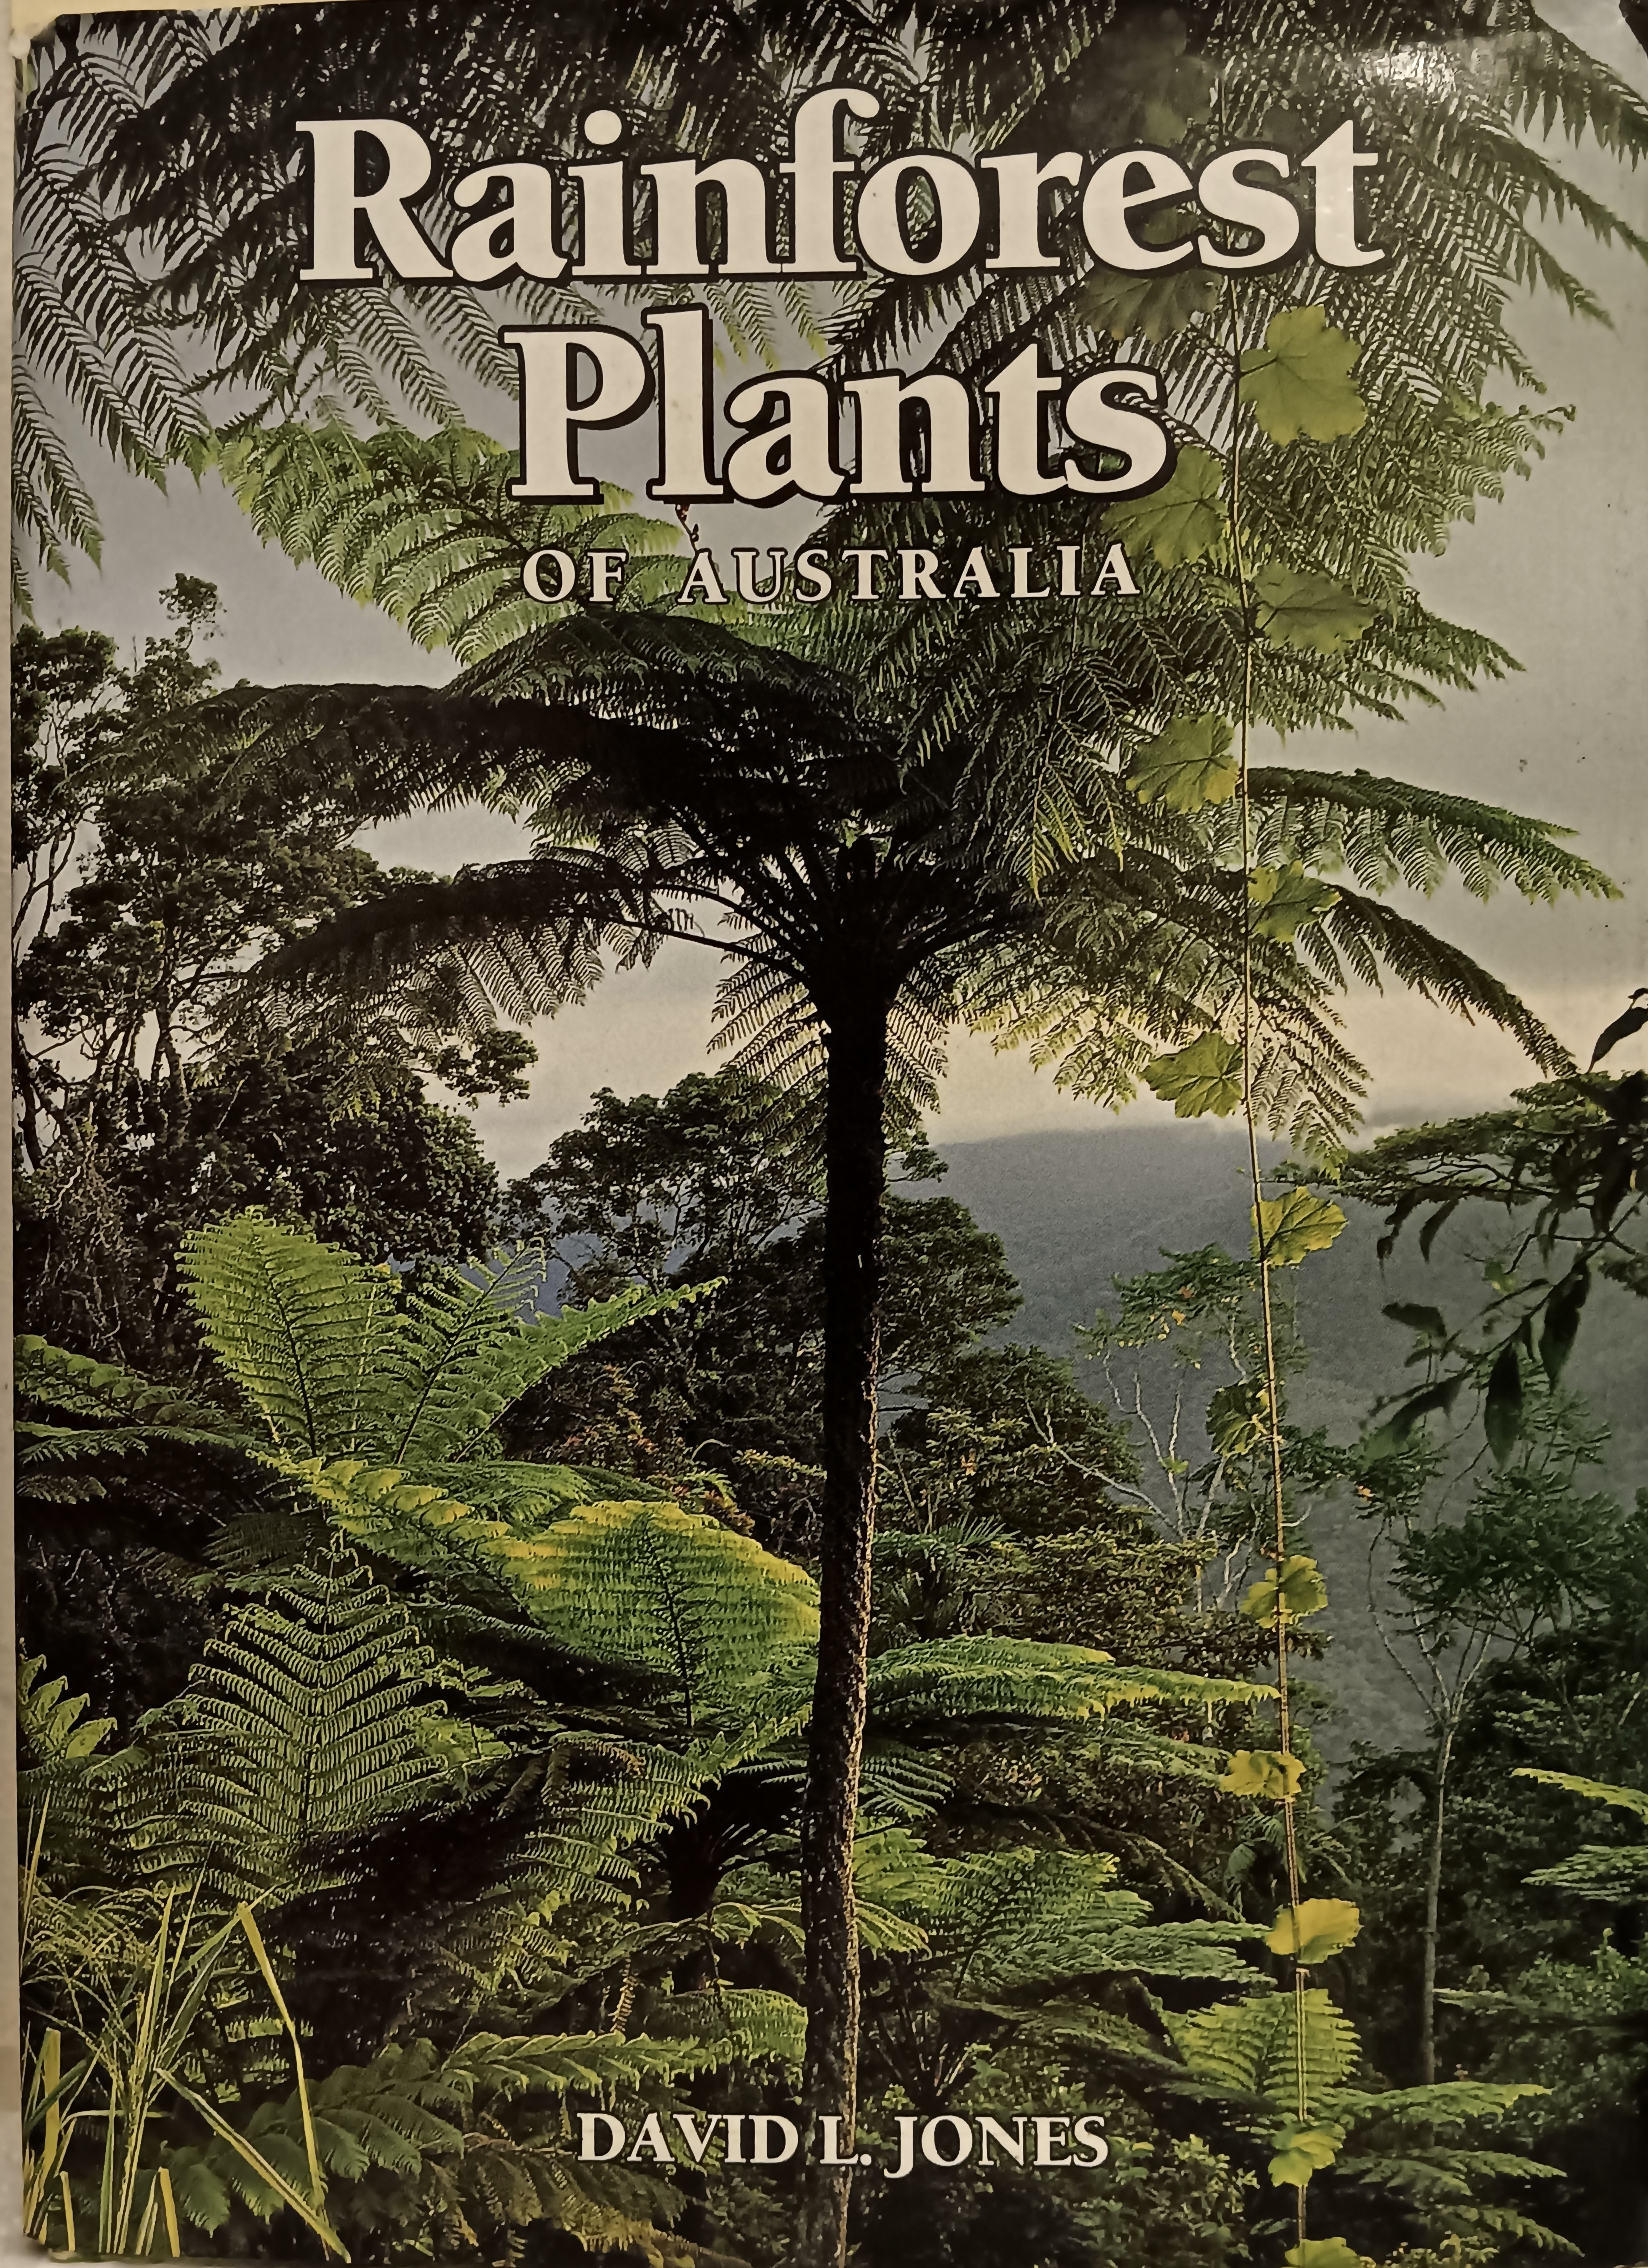 Rainforest Plants of Australia [Ornamental Rainforest Plants of Australia]. - Jones, David; Bolger, John (illustrator).